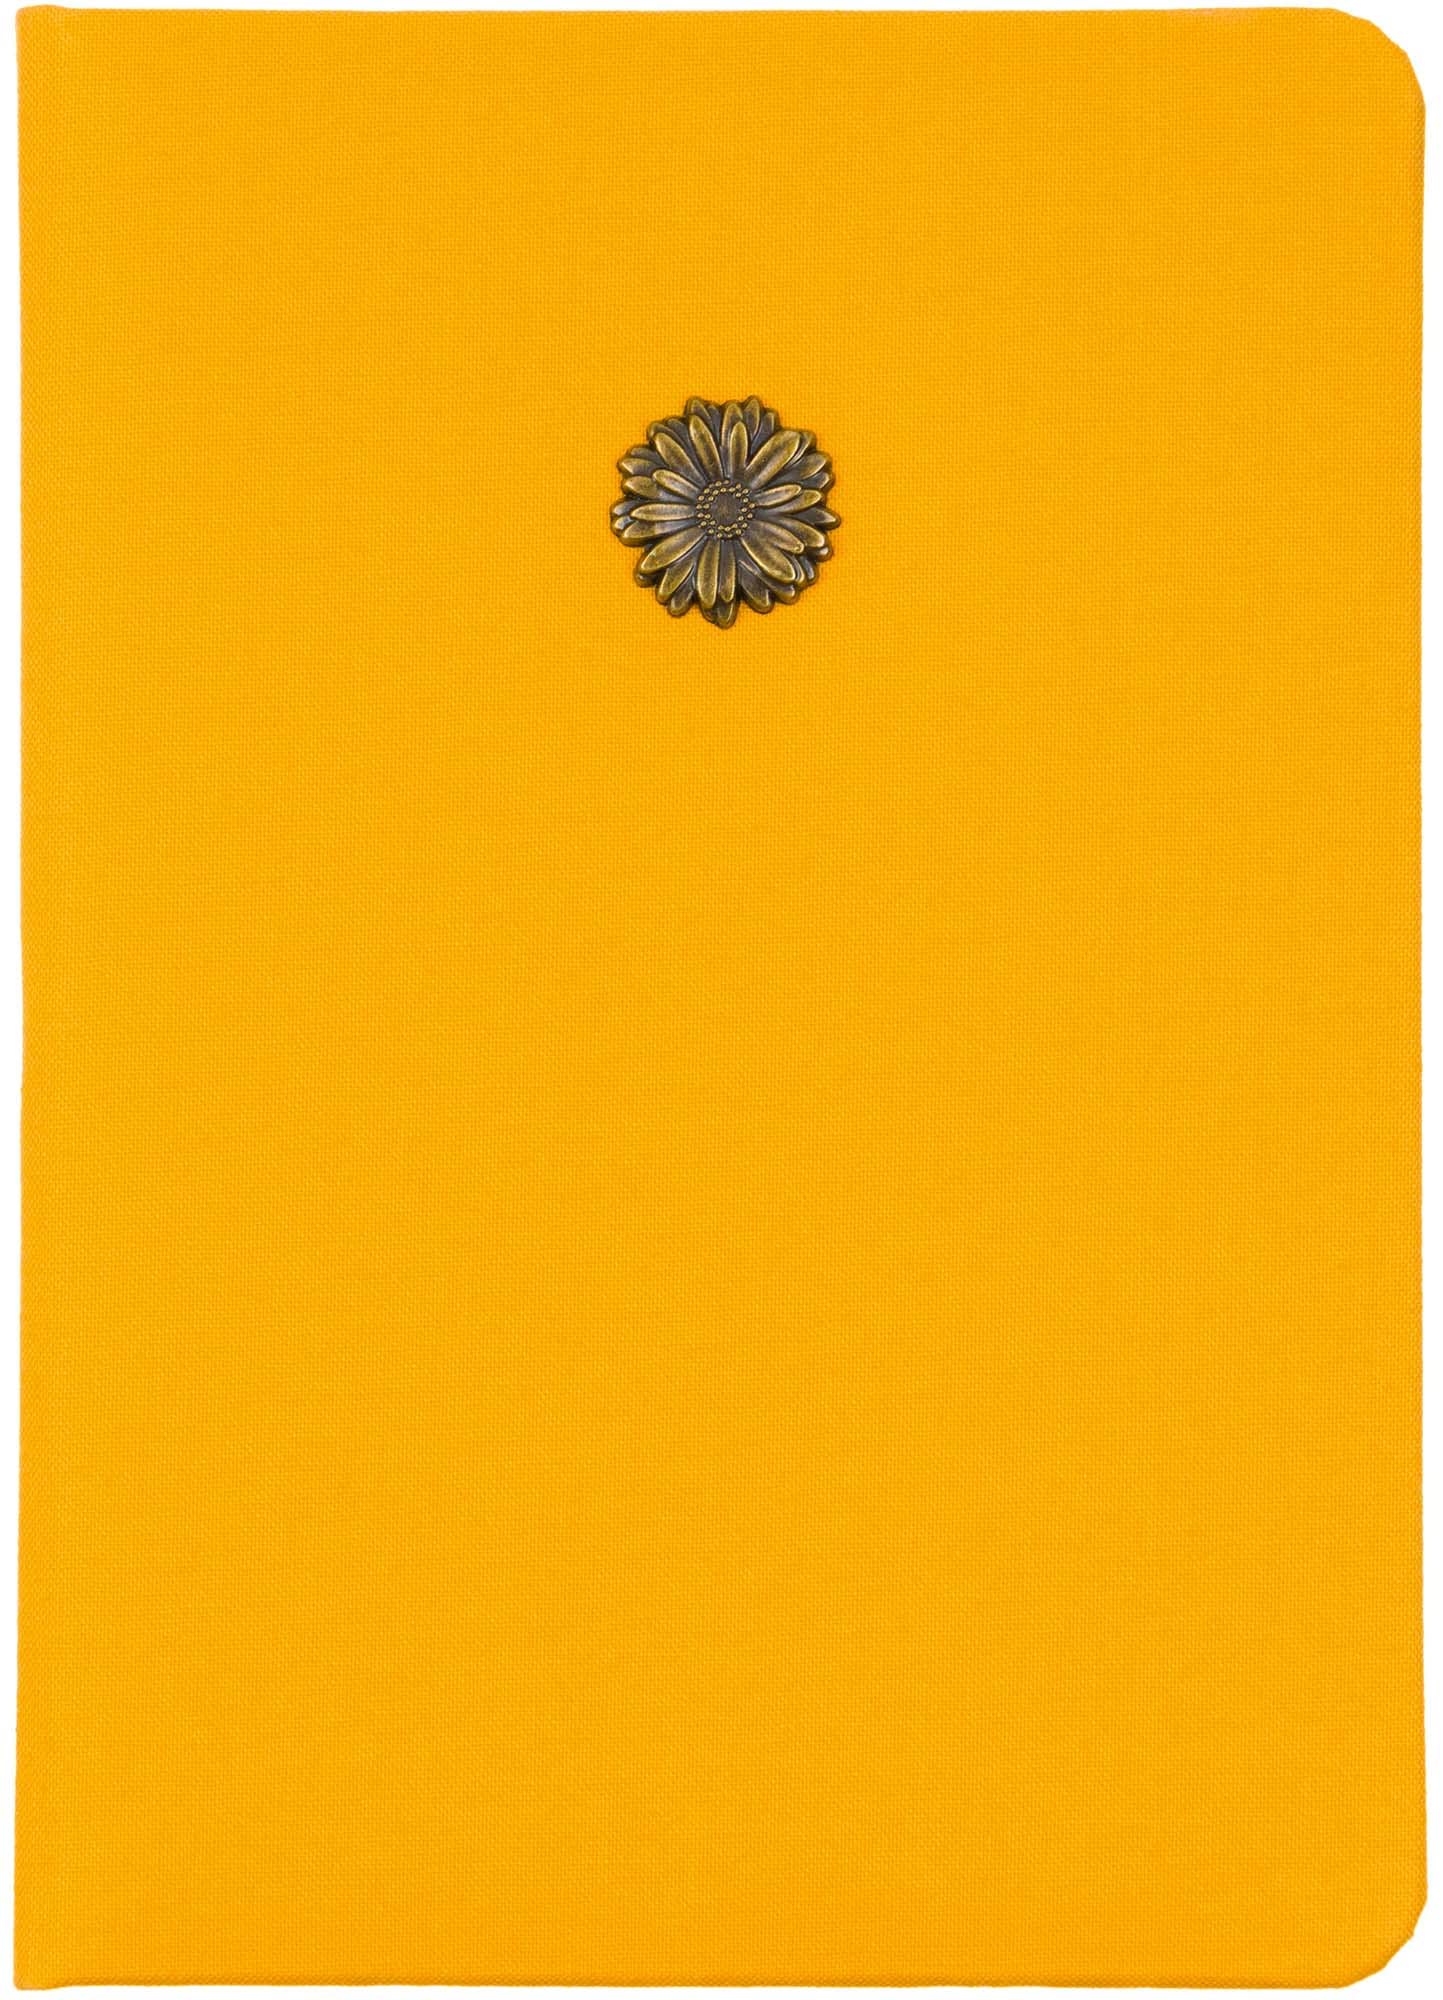 Eccolo Yellow Daisy Emblem Journal